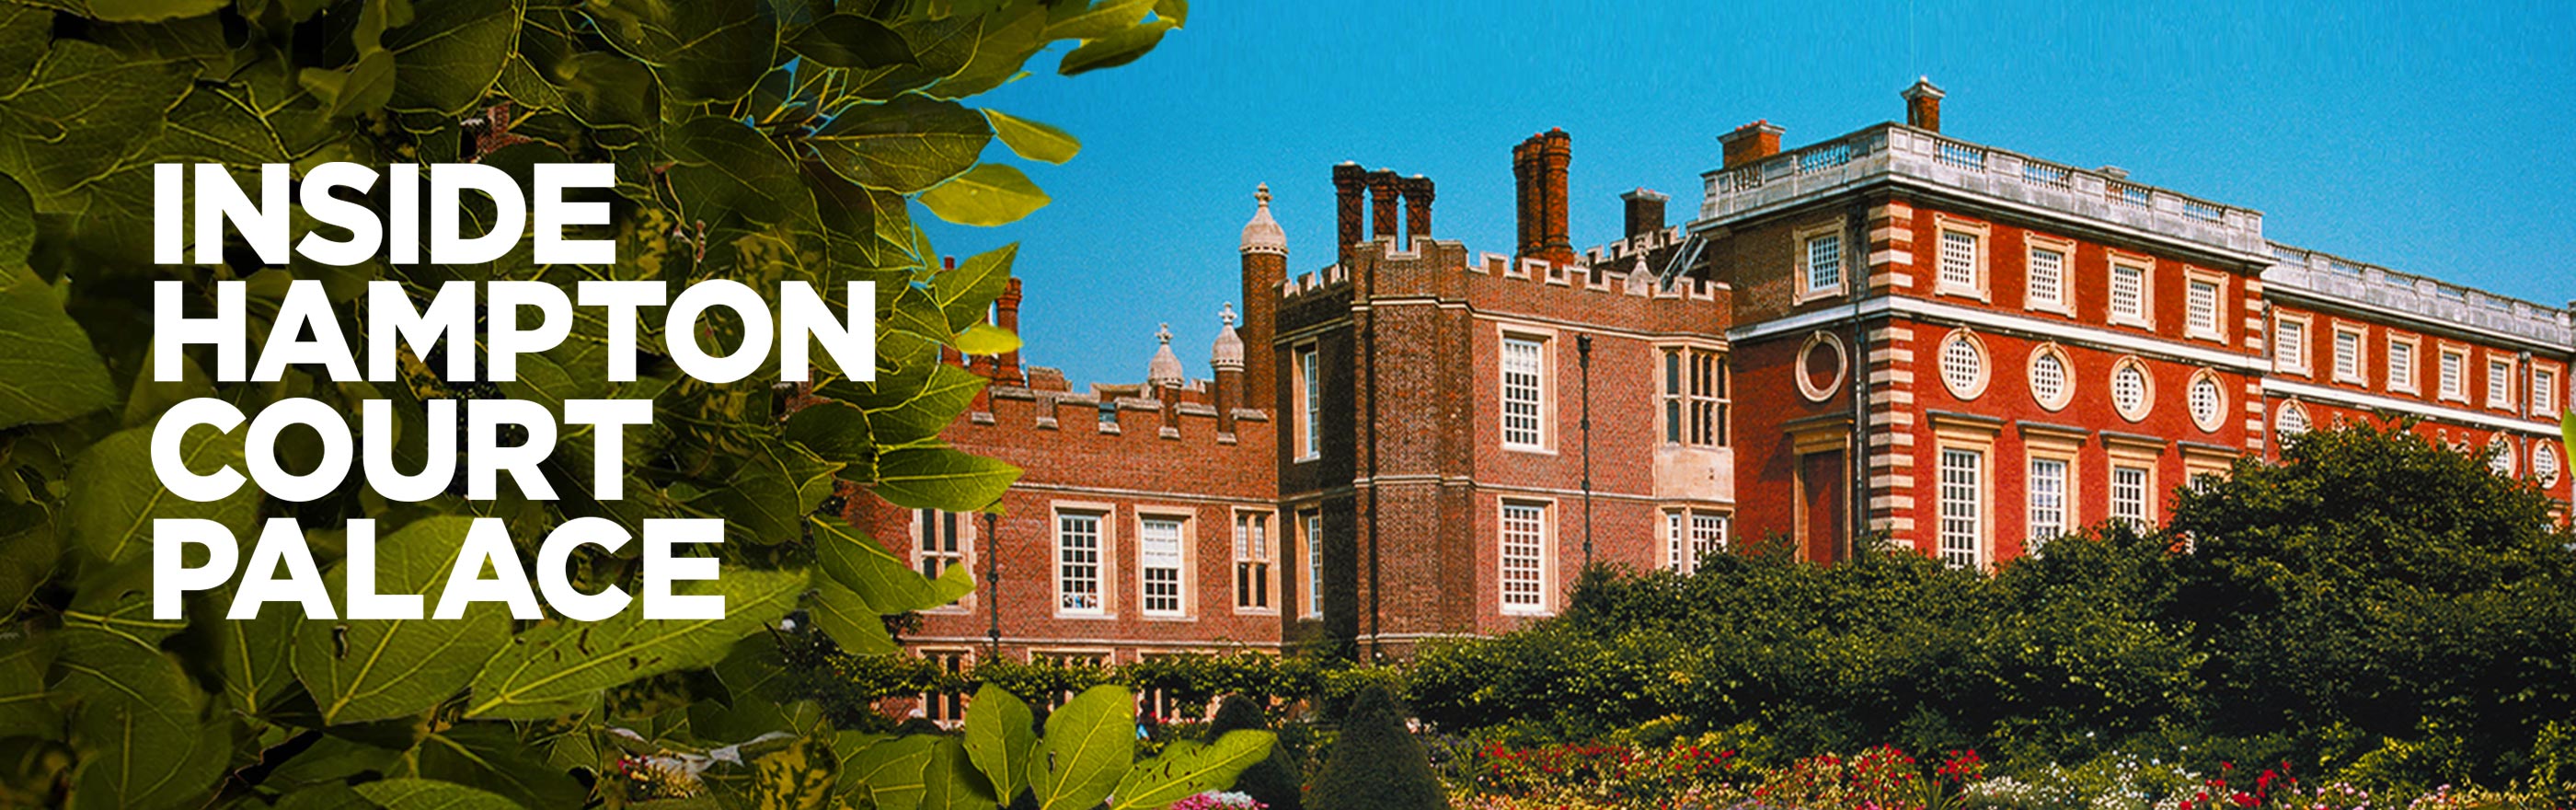 Inside Hampton Court Palace LOGO